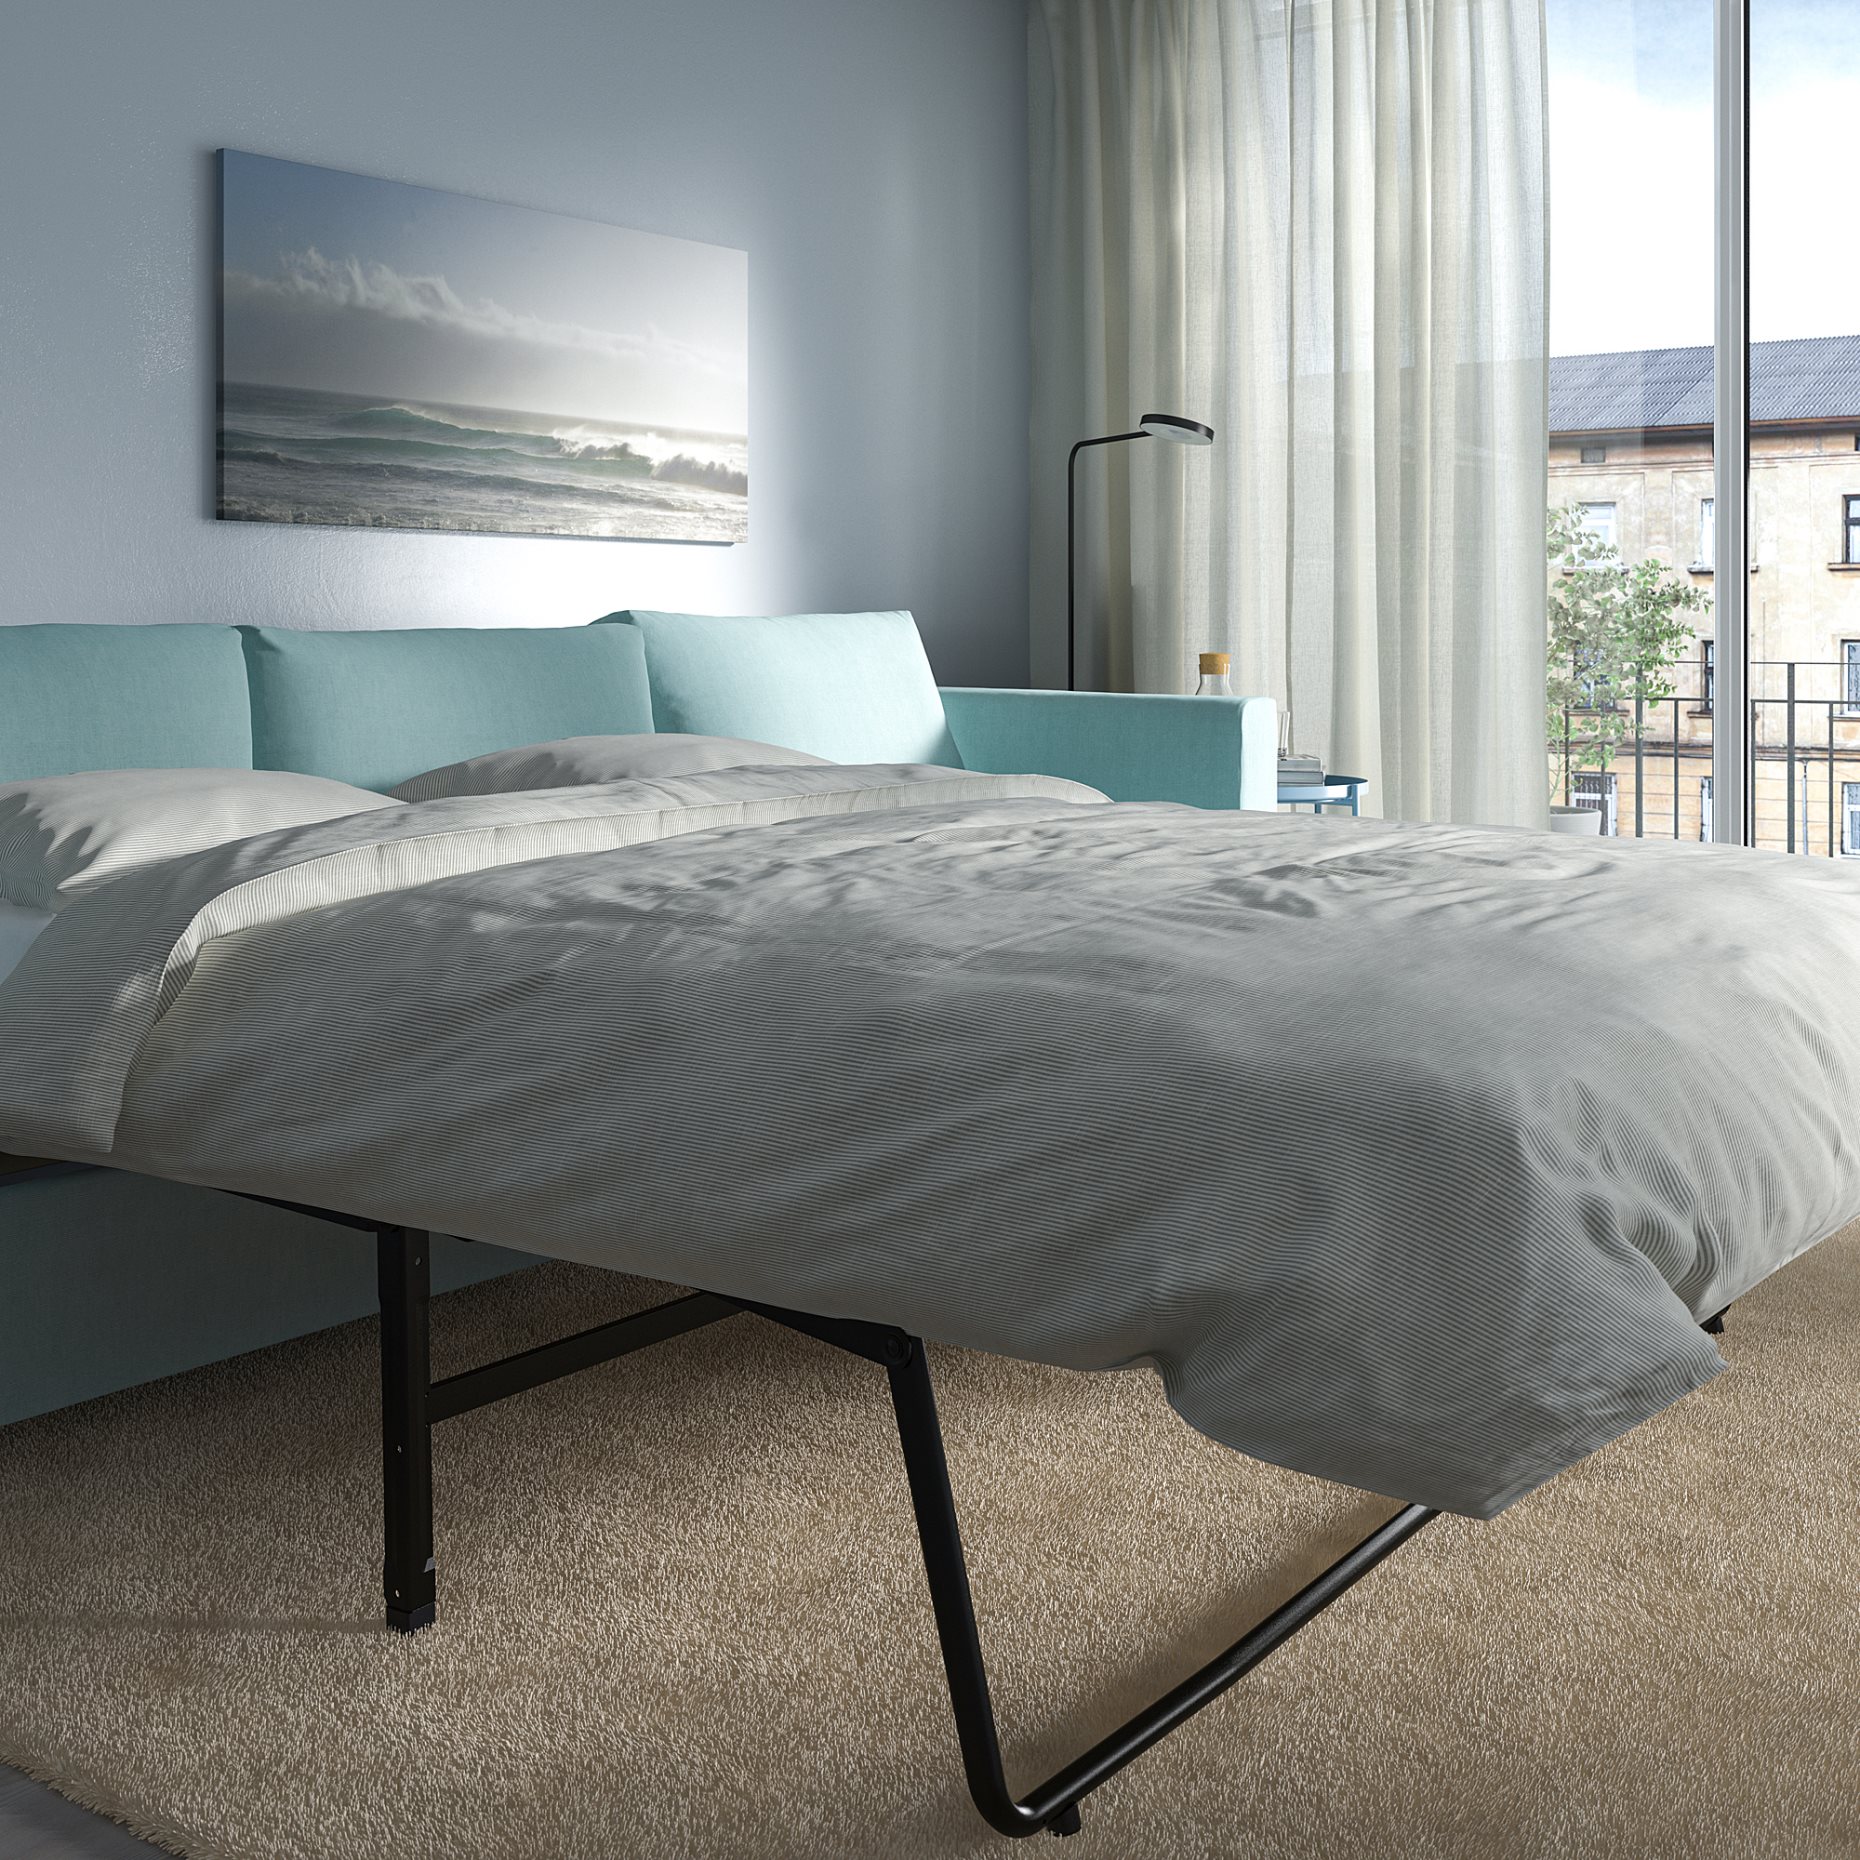 VIMLE, γωνιακός καναπές-κρεβάτι, 5 θέσεων με σεζλόνγκ, 095.371.72